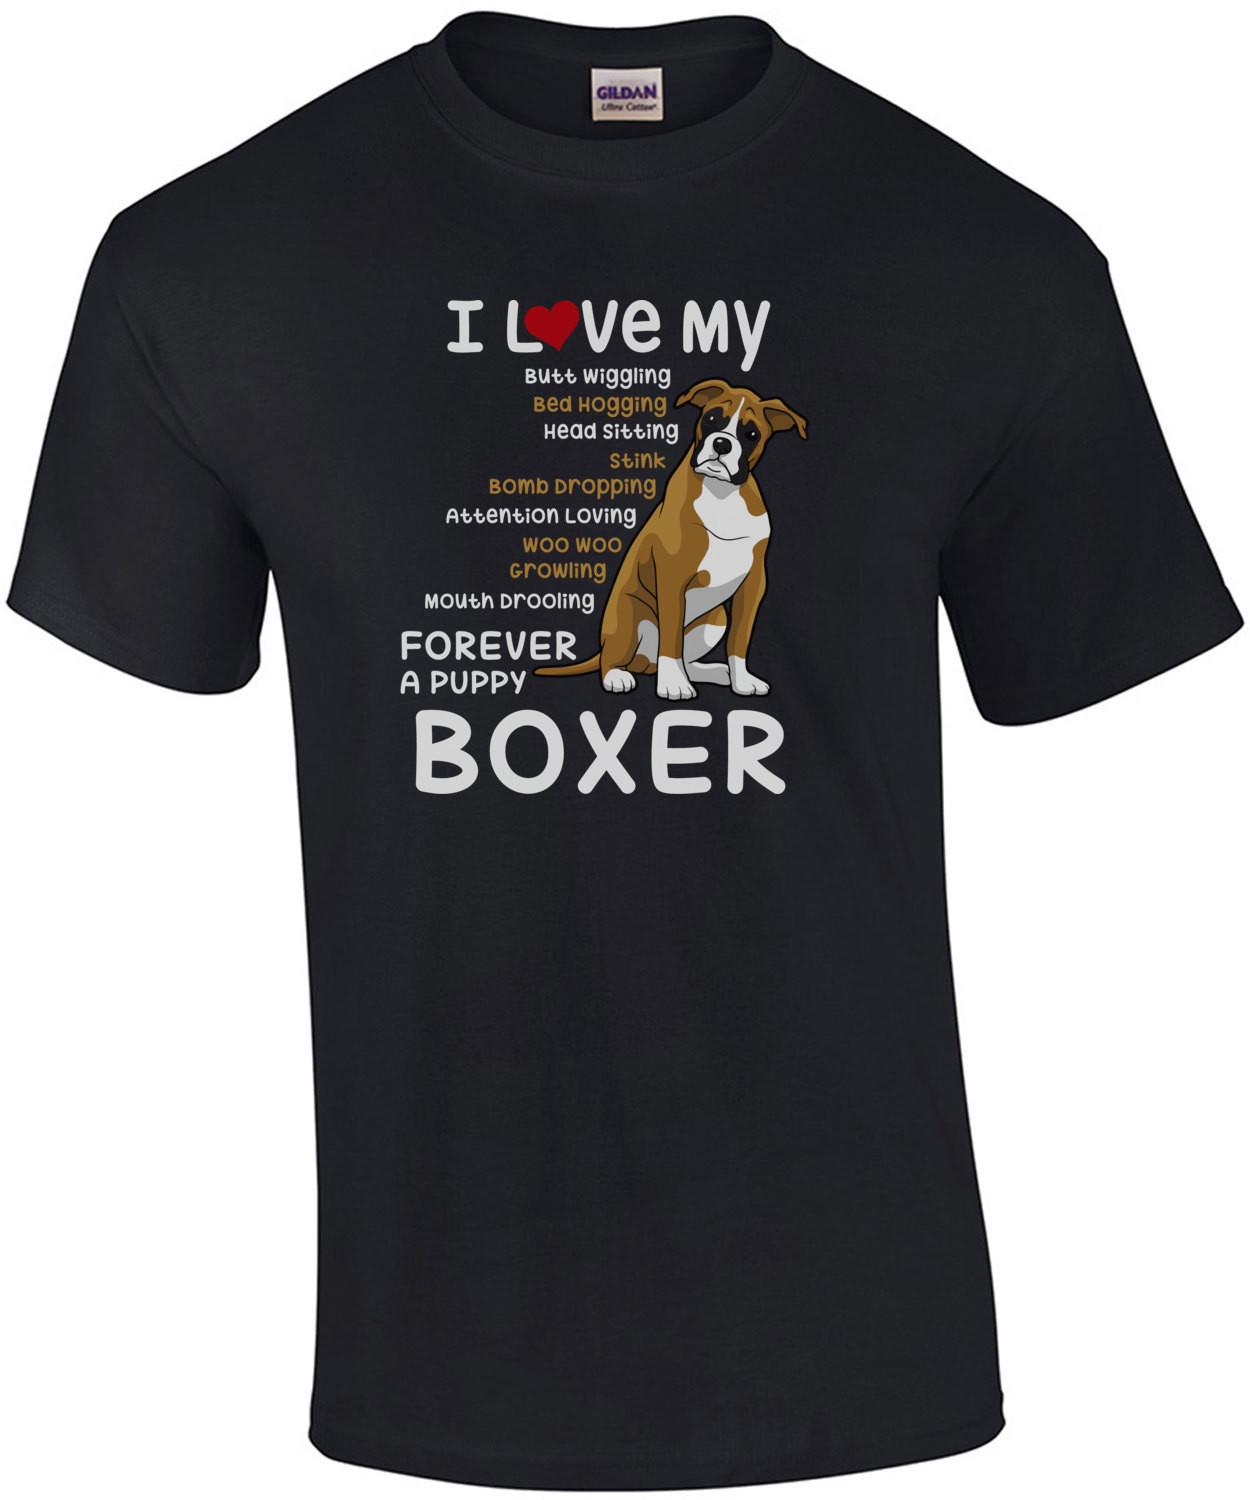 I love my boxer - boxer t-shirt